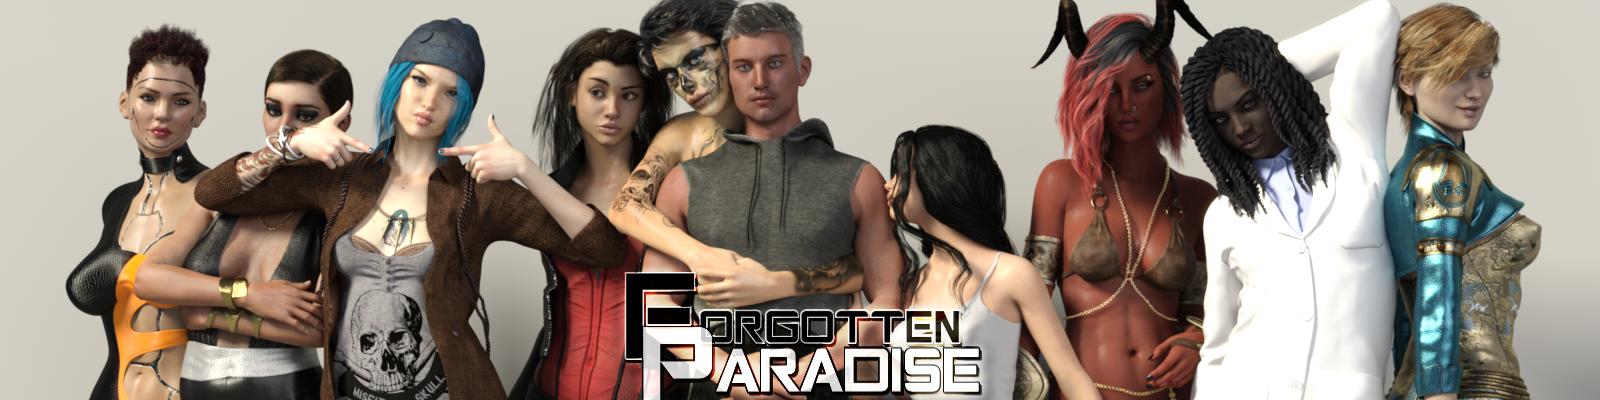 Void Star - Forgotten Paradise Version 1.0 Final